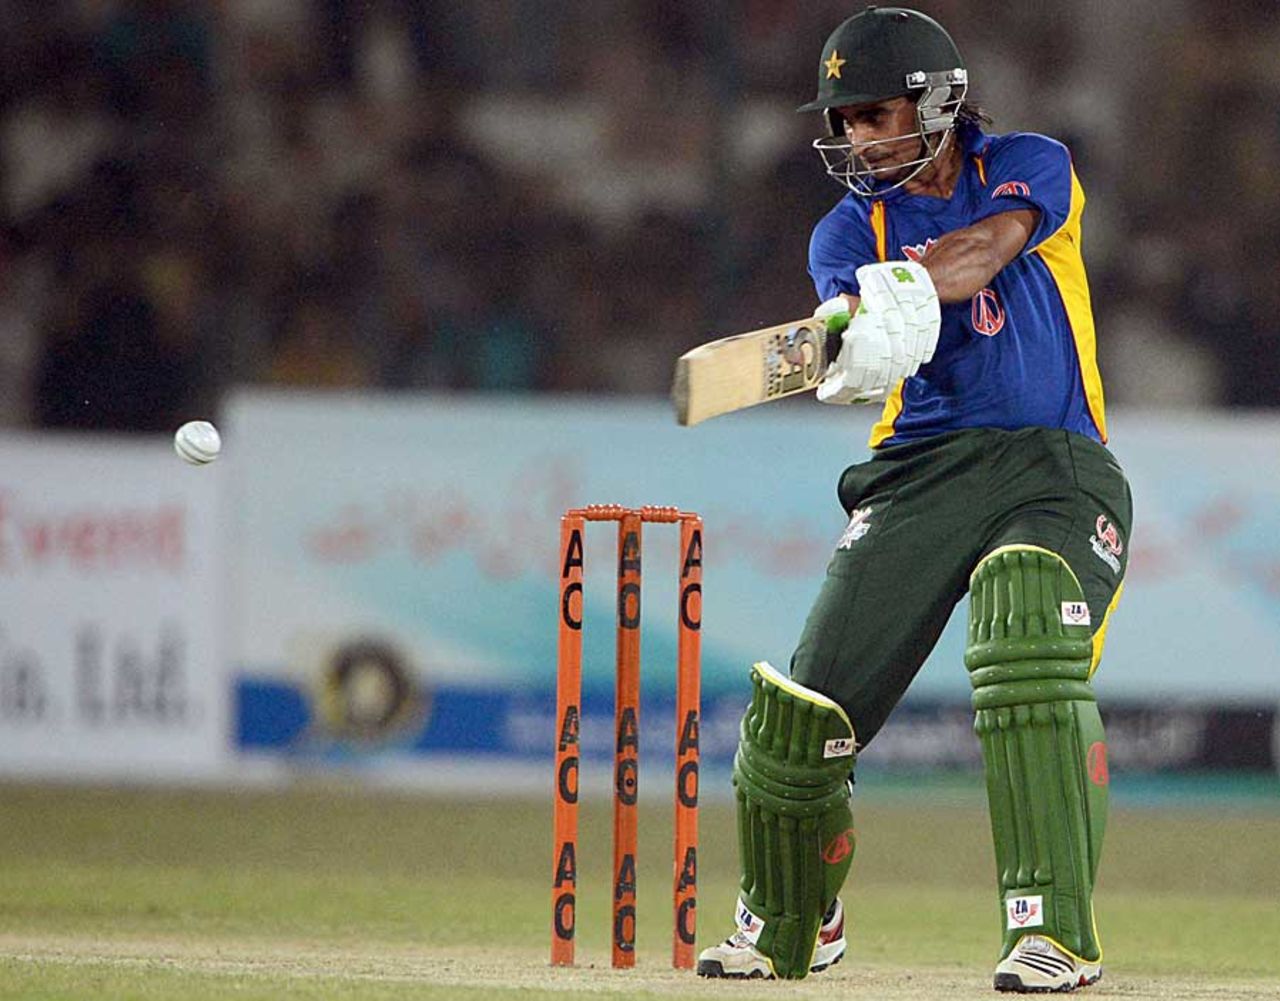 Imran Nazir slashes one during his half-century, Pakistan All Star XI v International XI, Karachi, October 21, 2012